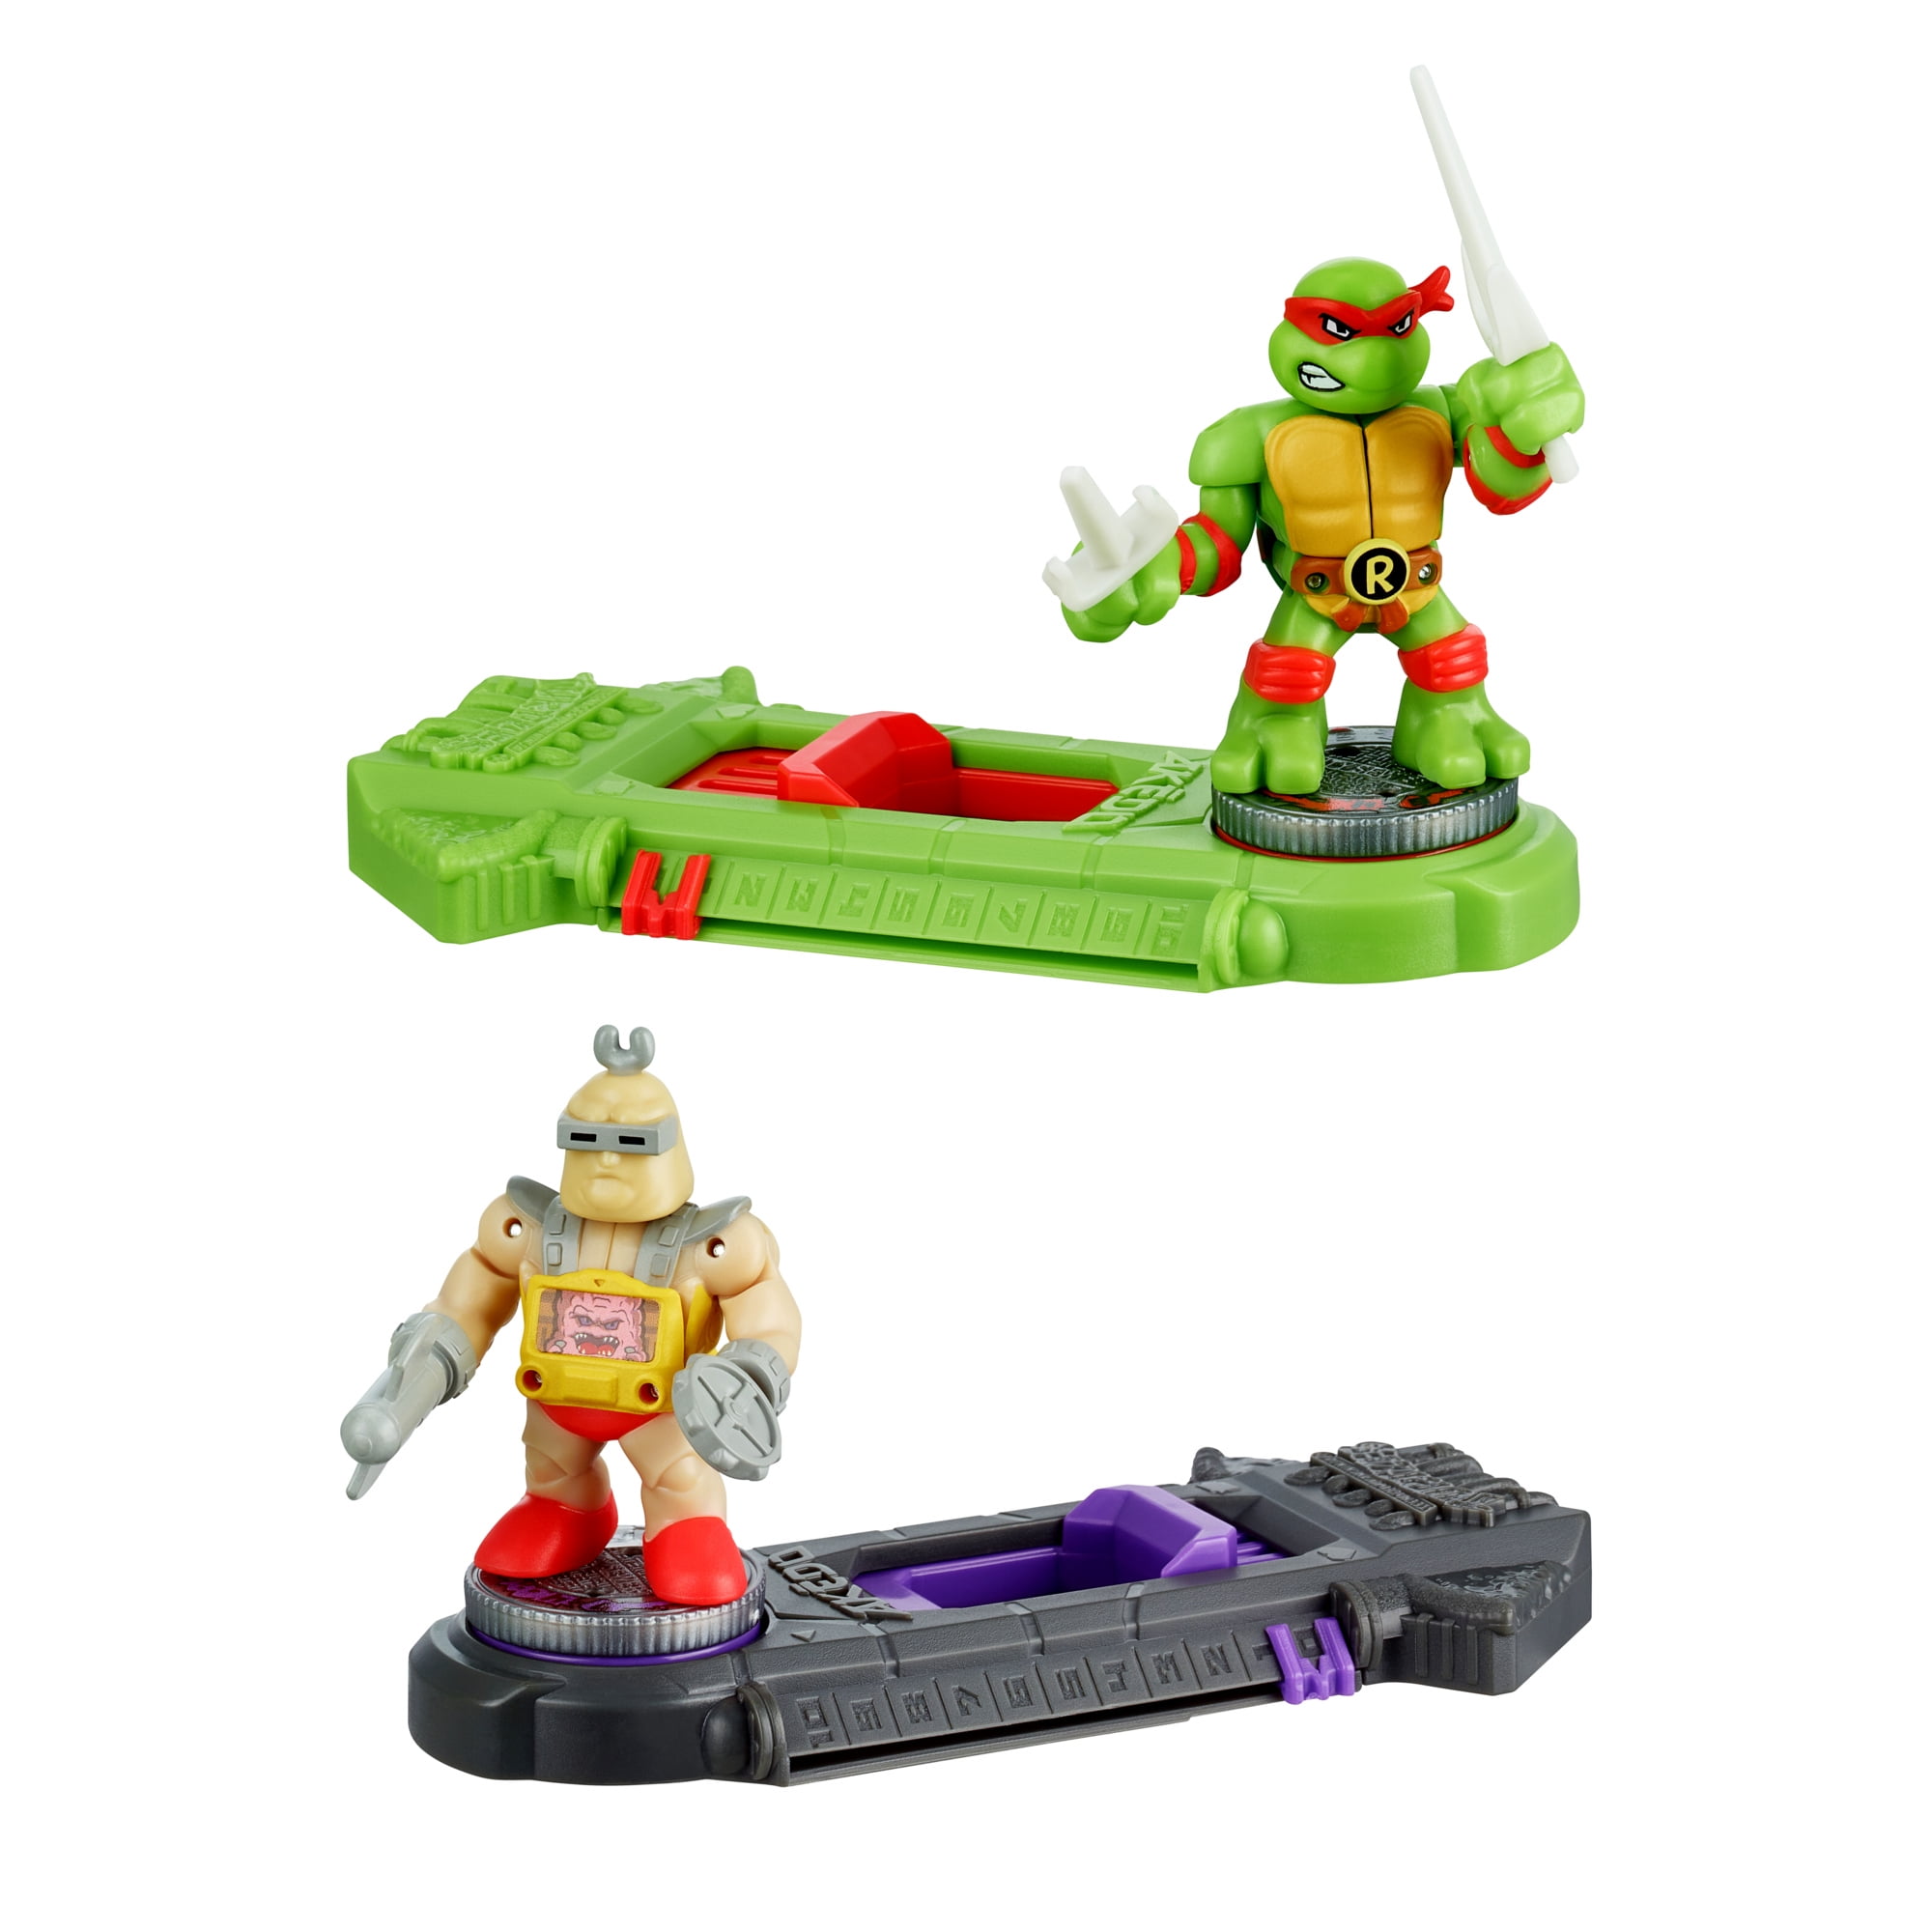 Ninja Turtles toys overload! New Akēdo, Funko Mystery Minis and Funko